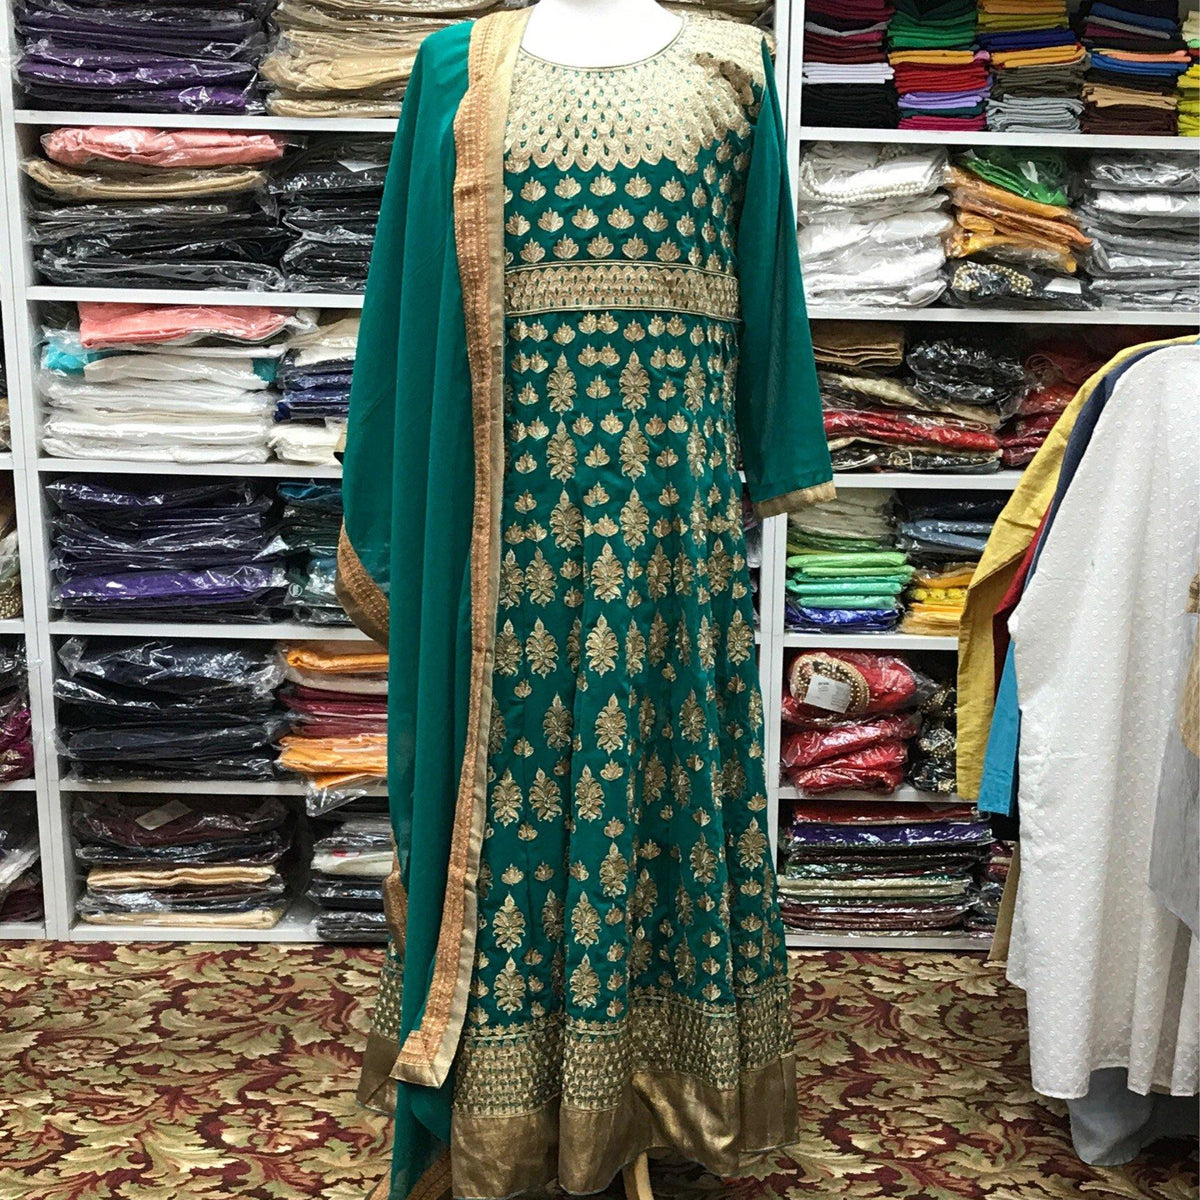 Anarkali Churidar Size 46 - Mirage Sari Center